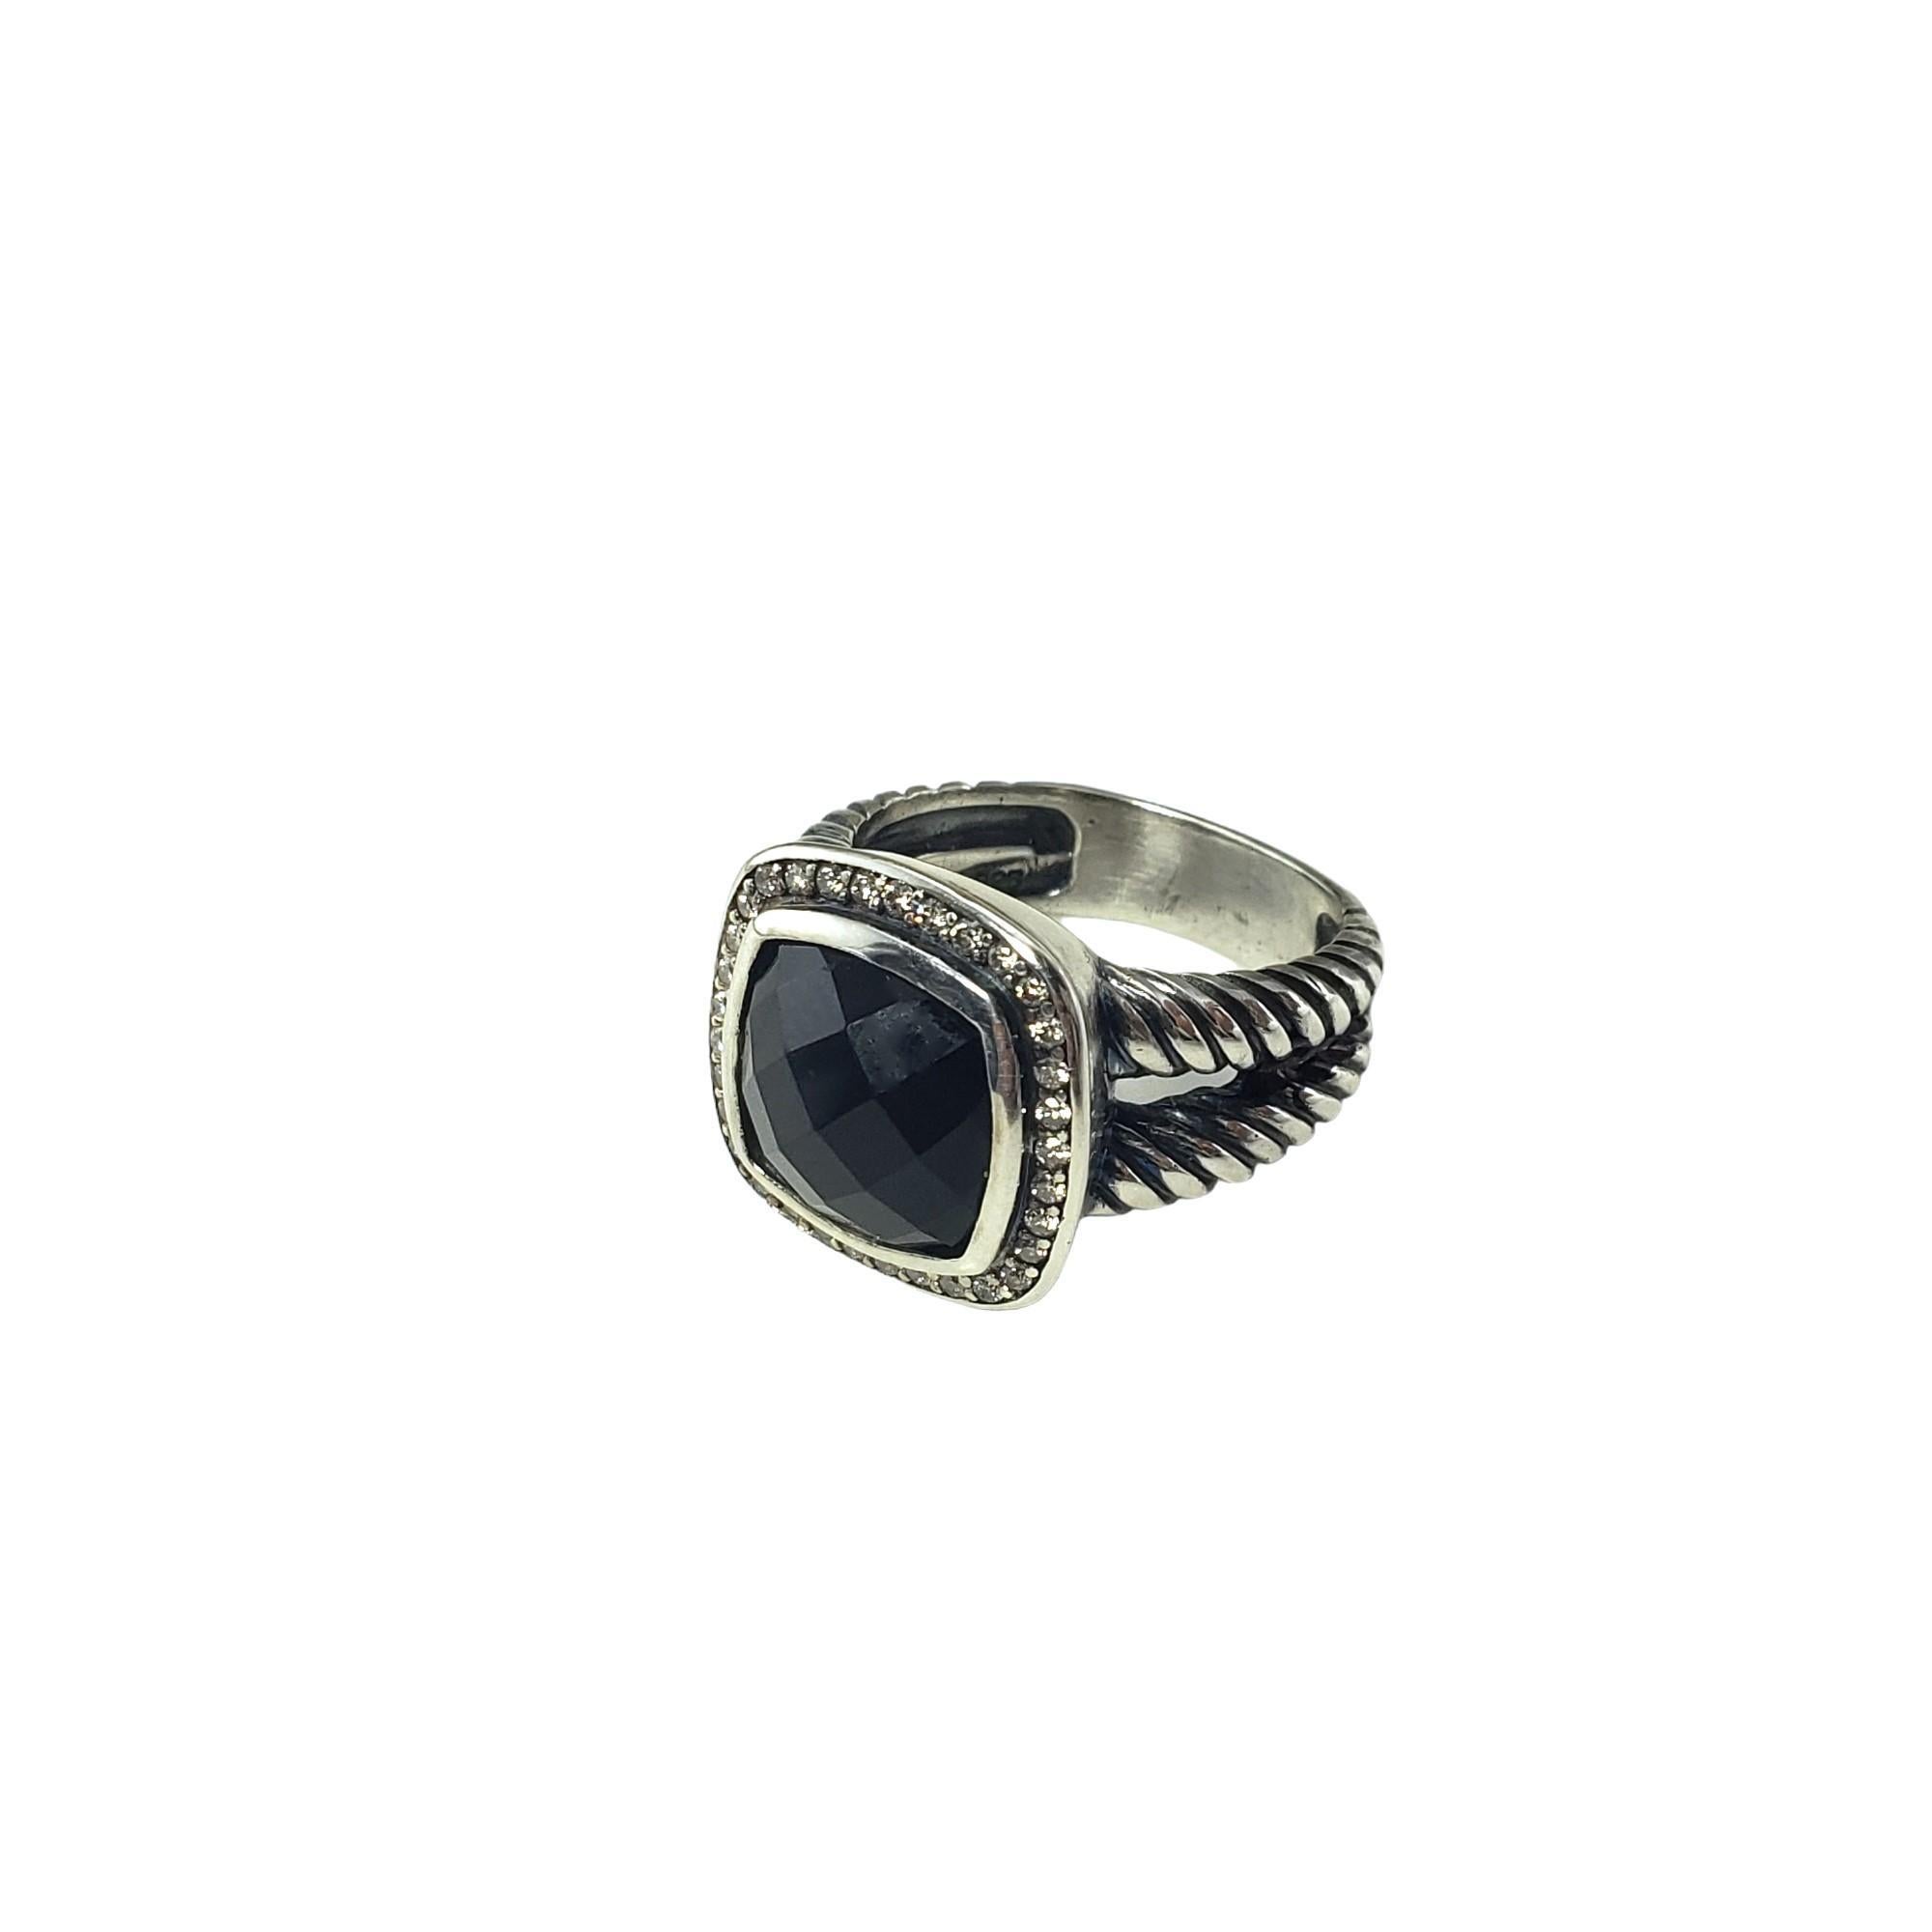 Round Cut David Yurman Sterling Silver Black Onyx Diamond Ring Size 6.75 #15304